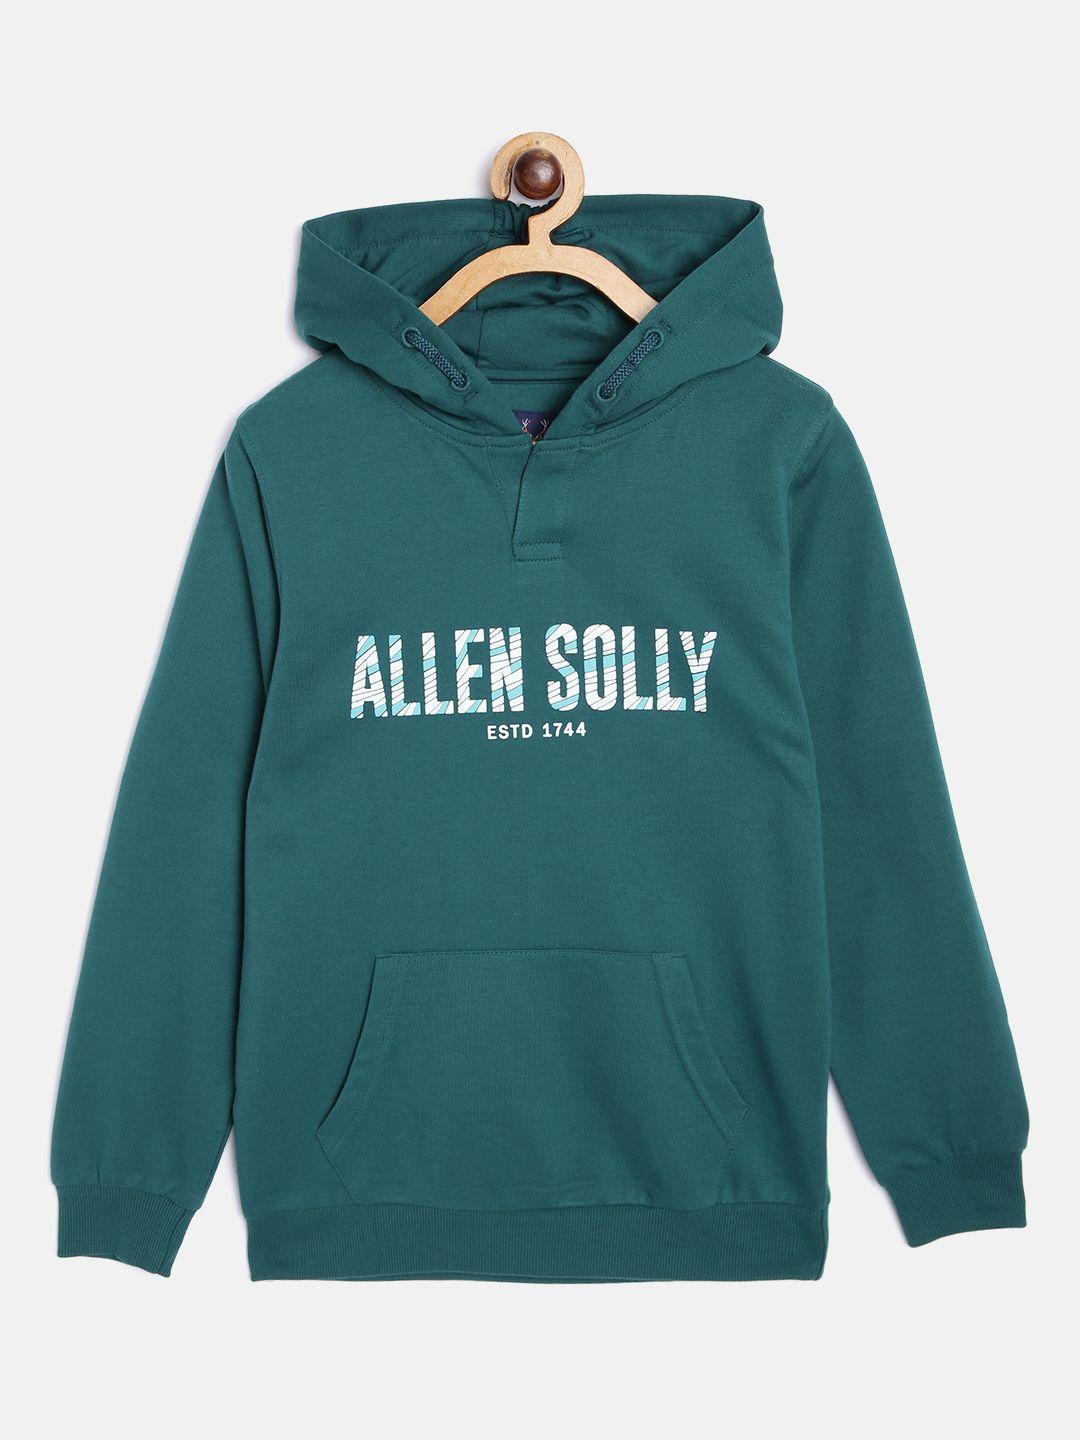 allen solly junior boys teal green & white brand logo print hooded sweatshirt